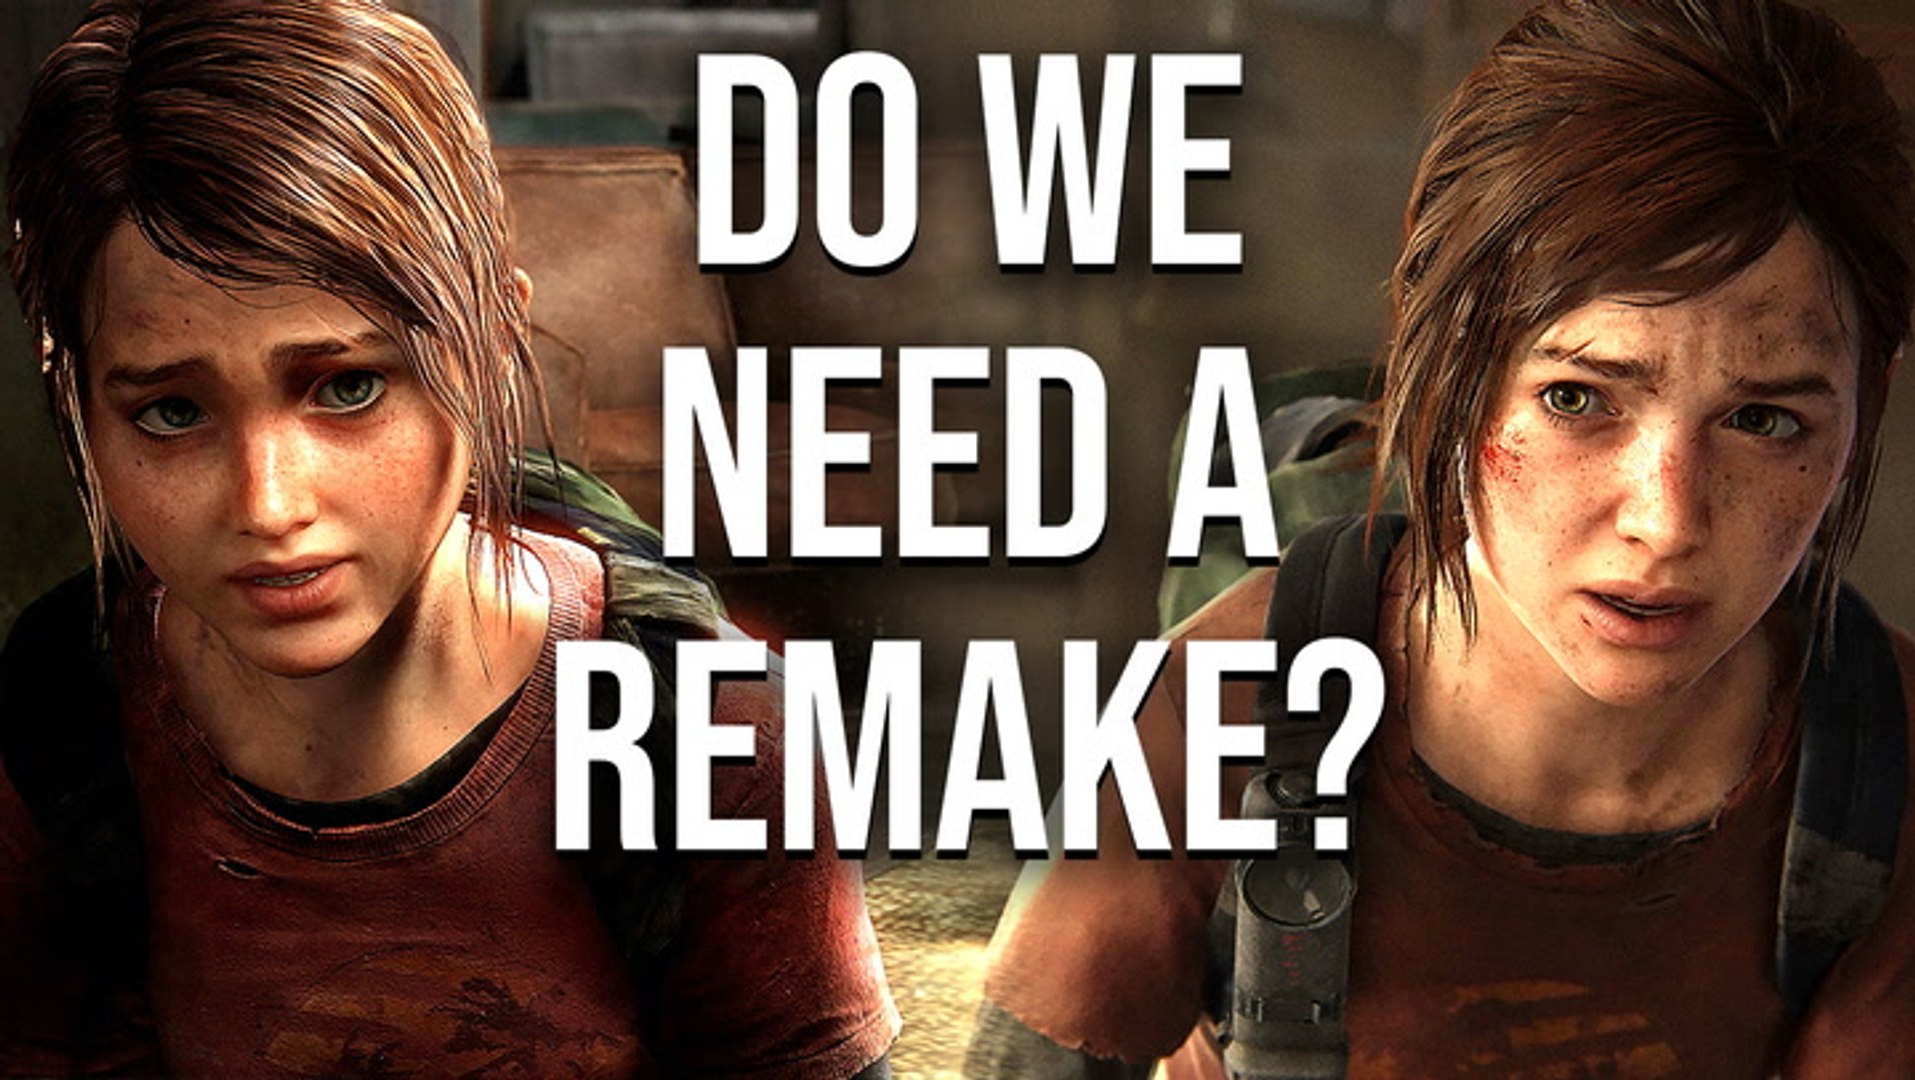 Analista De Bits The Last of Us Part I Original VS Remake Gameplay Trailer  Graphics Comparison - video Dailymotion